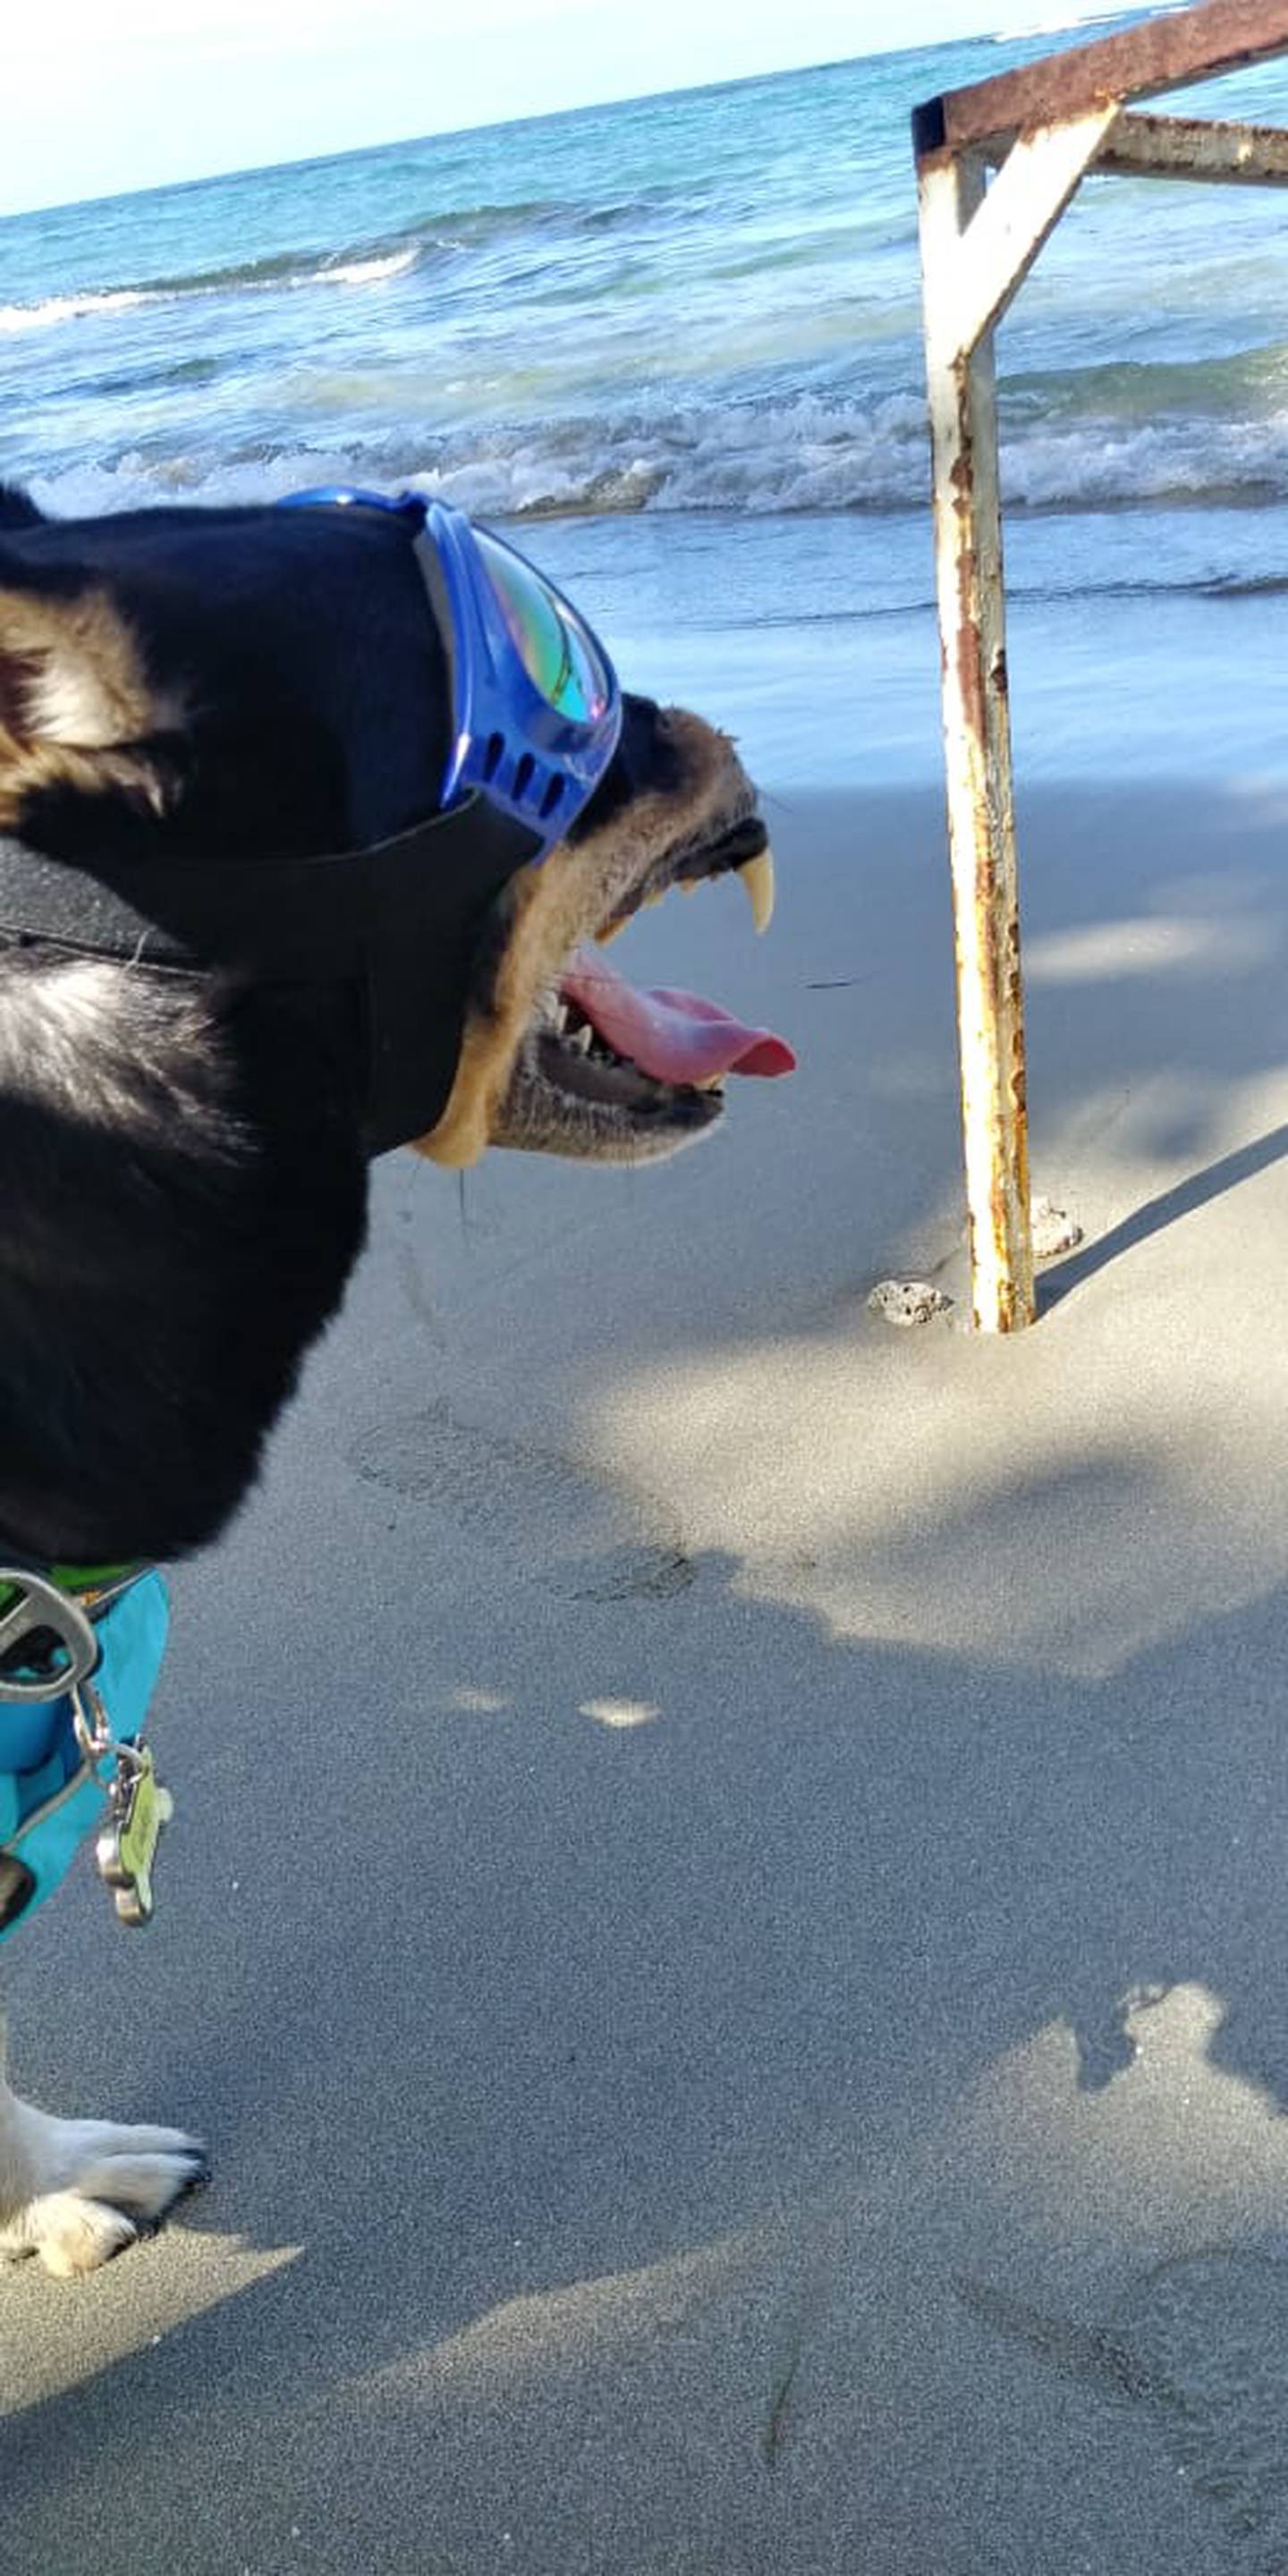 Duke el perrito macheteado en el 2016 se va a vivir a Puerto Viejo de Talamanca